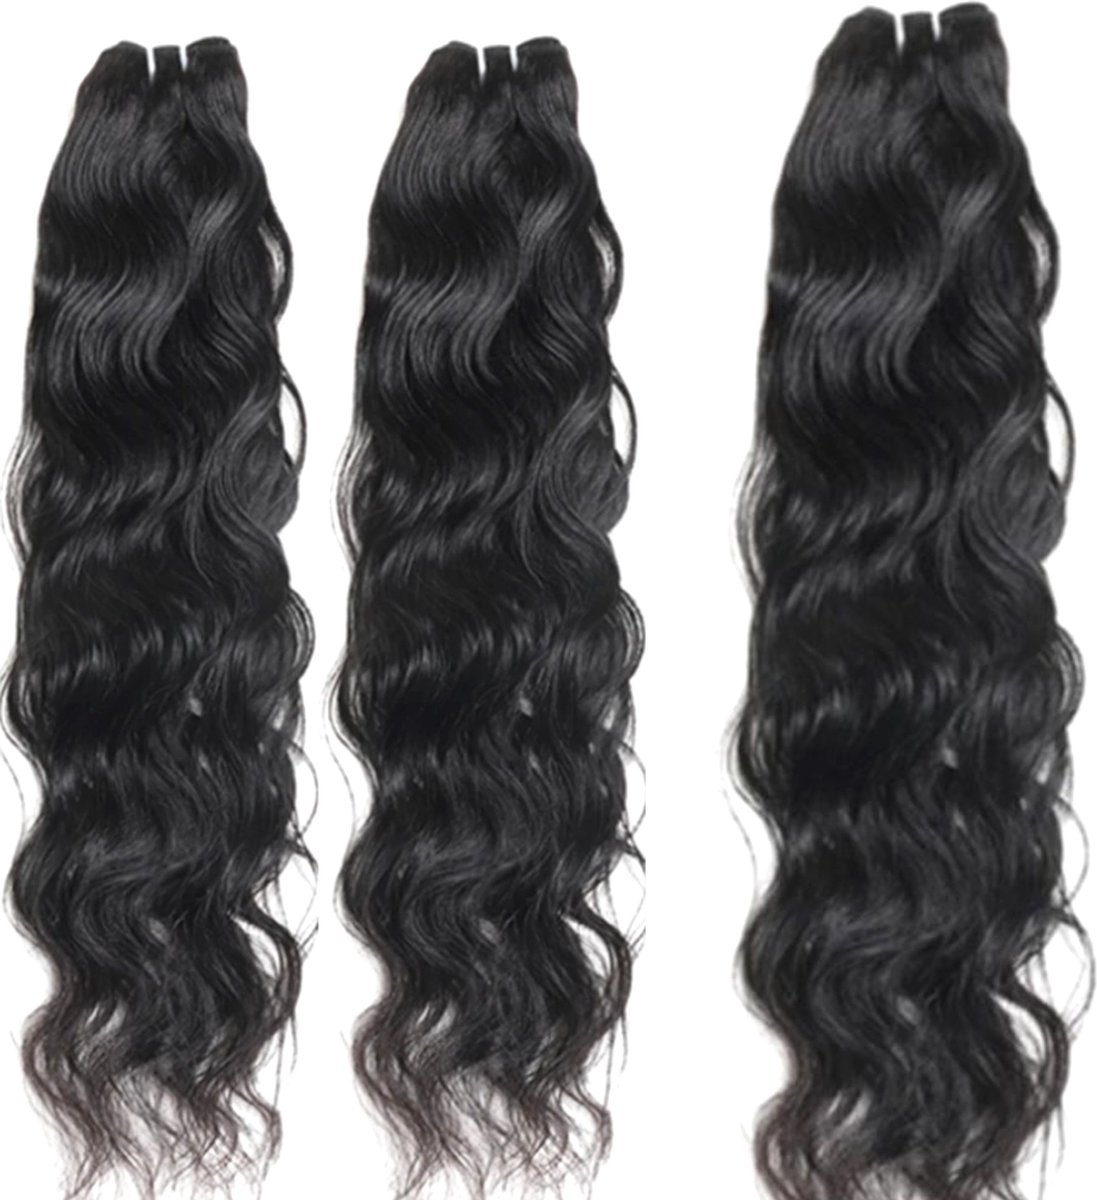 Braziliaanse remy weave - 24 inch golf hair extension kleur zwart - echt menselijke haren 1 stuk